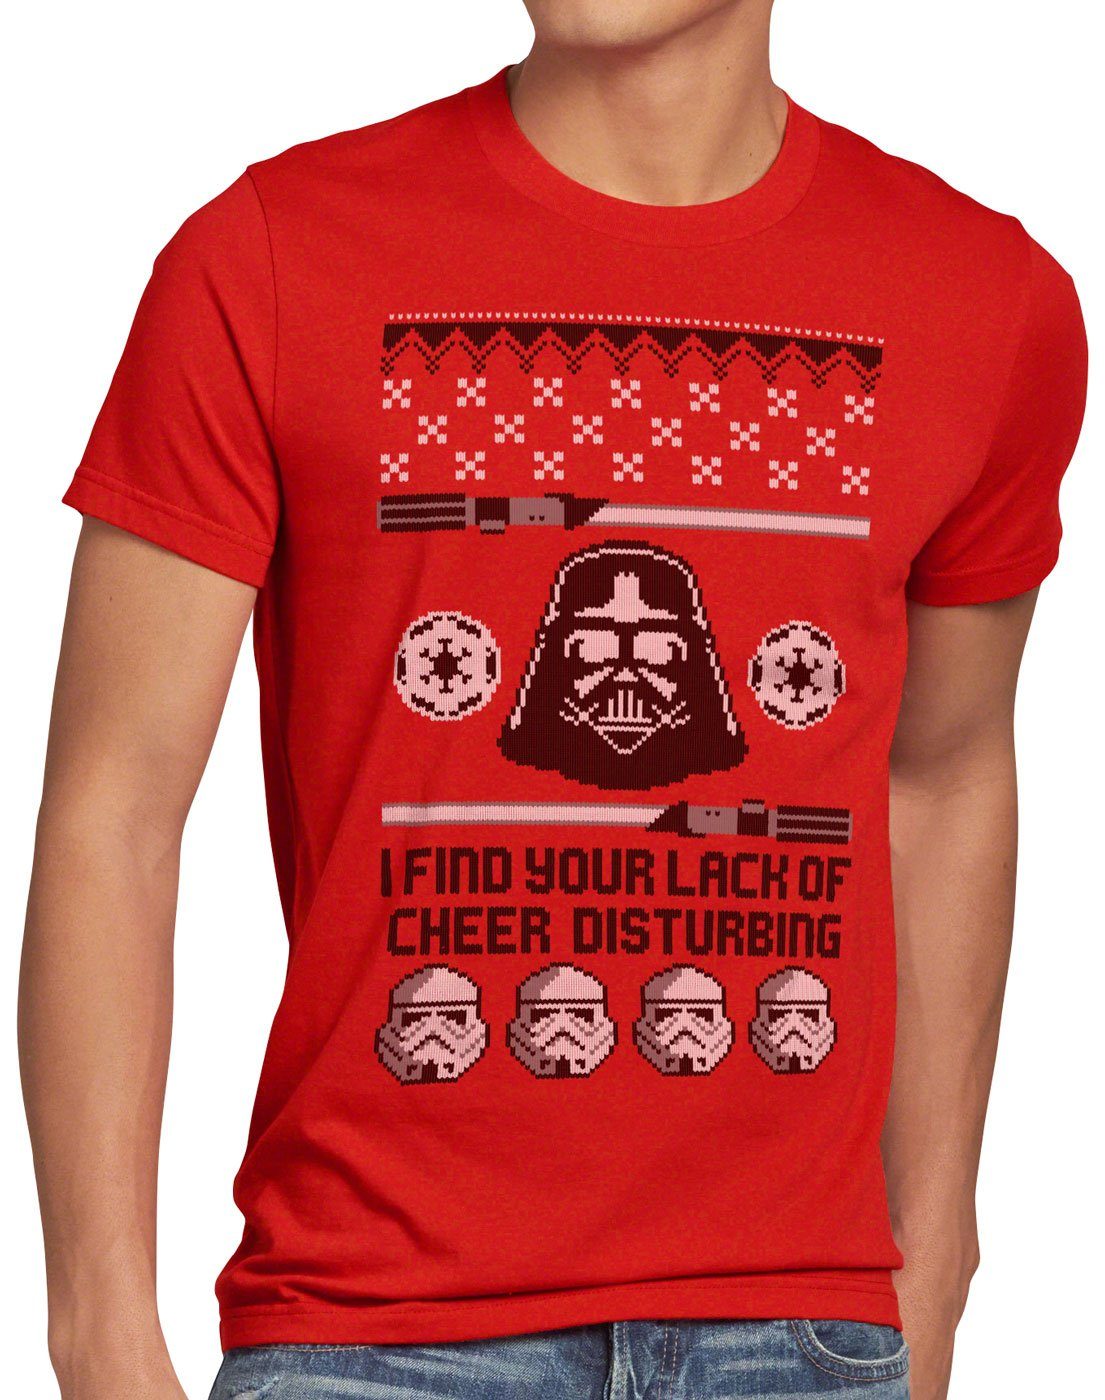 of Ugly x-mas Herren rot Print-Shirt lichtschwert style3 sith weihnachtsbaum Lack Sweater Cheer vader T-Shirt pulli